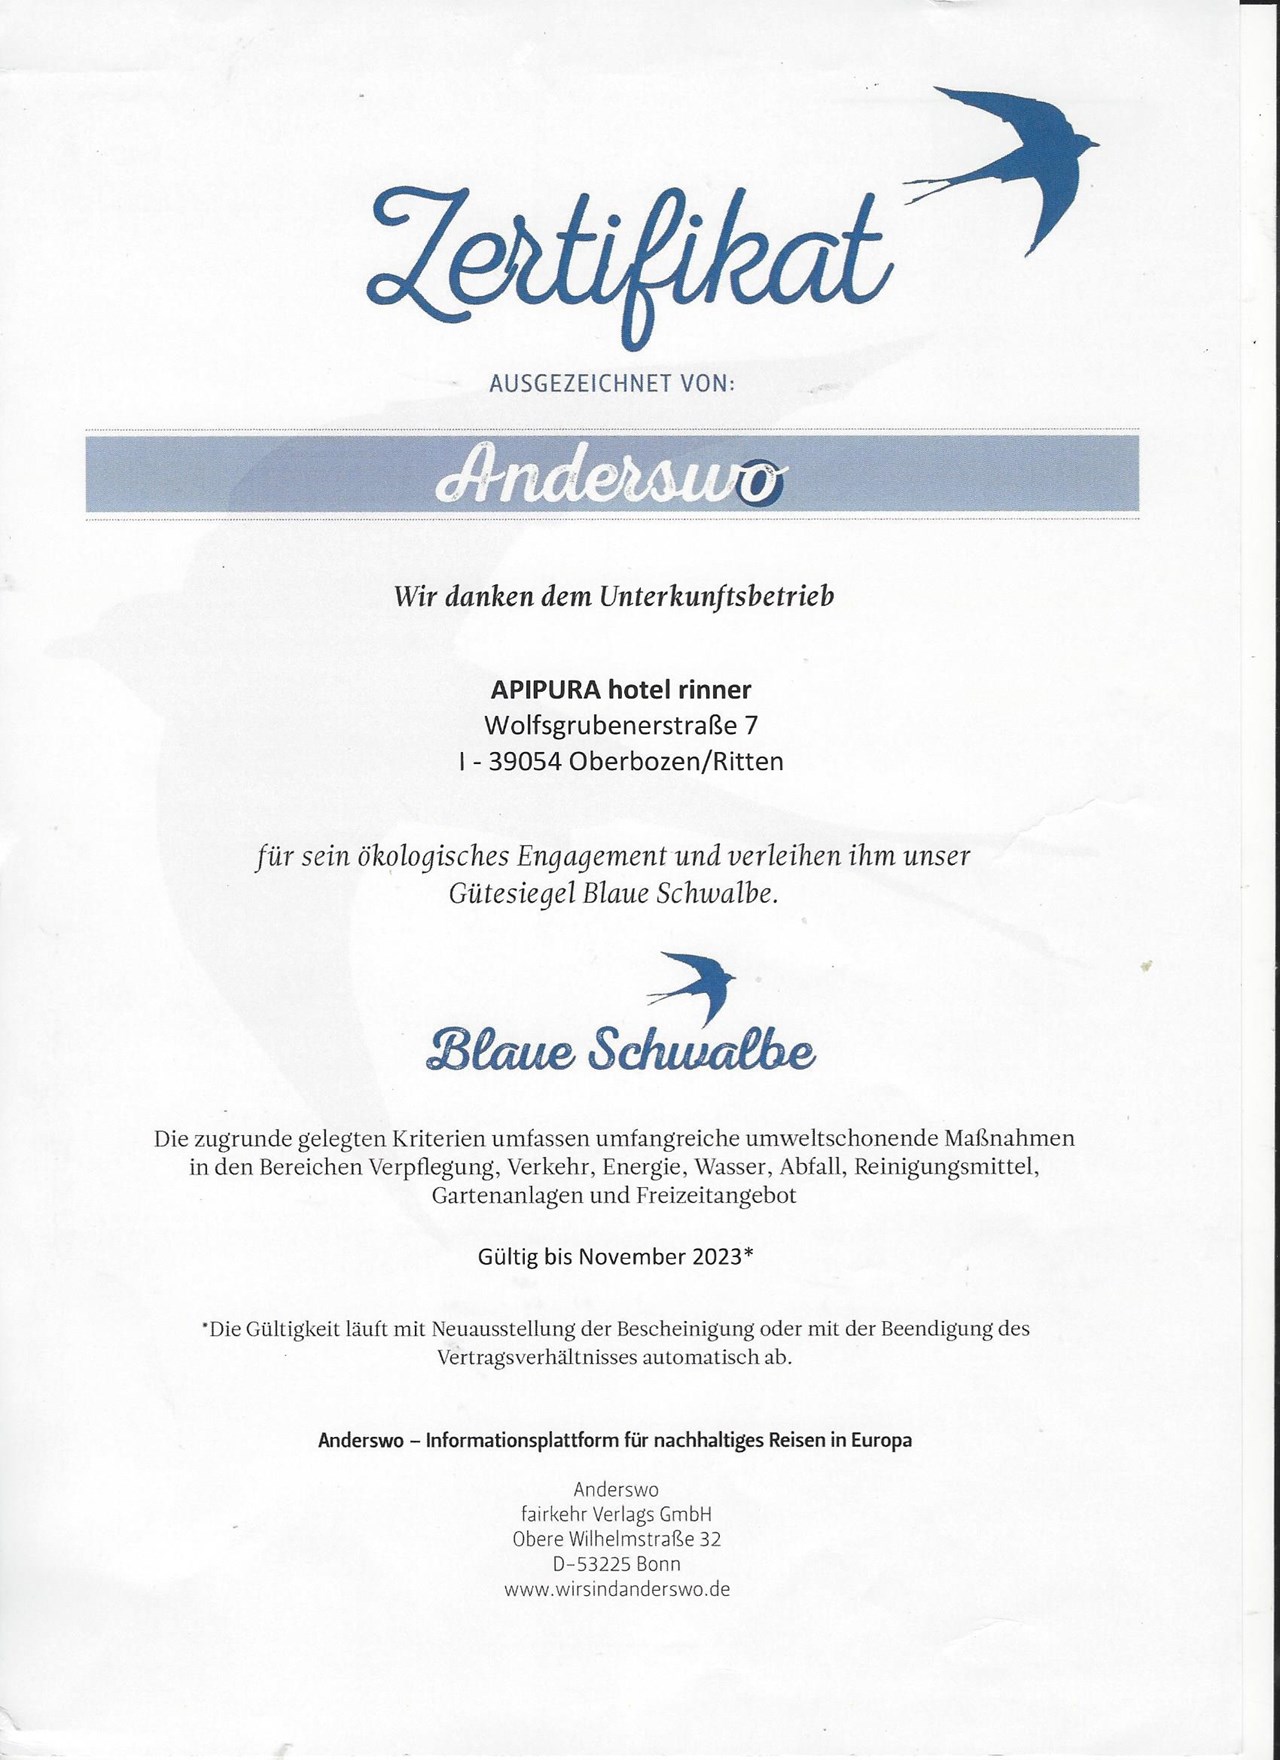 APIPURA hotel rinner Nachweise Zertifikate Blaue Schwalbe